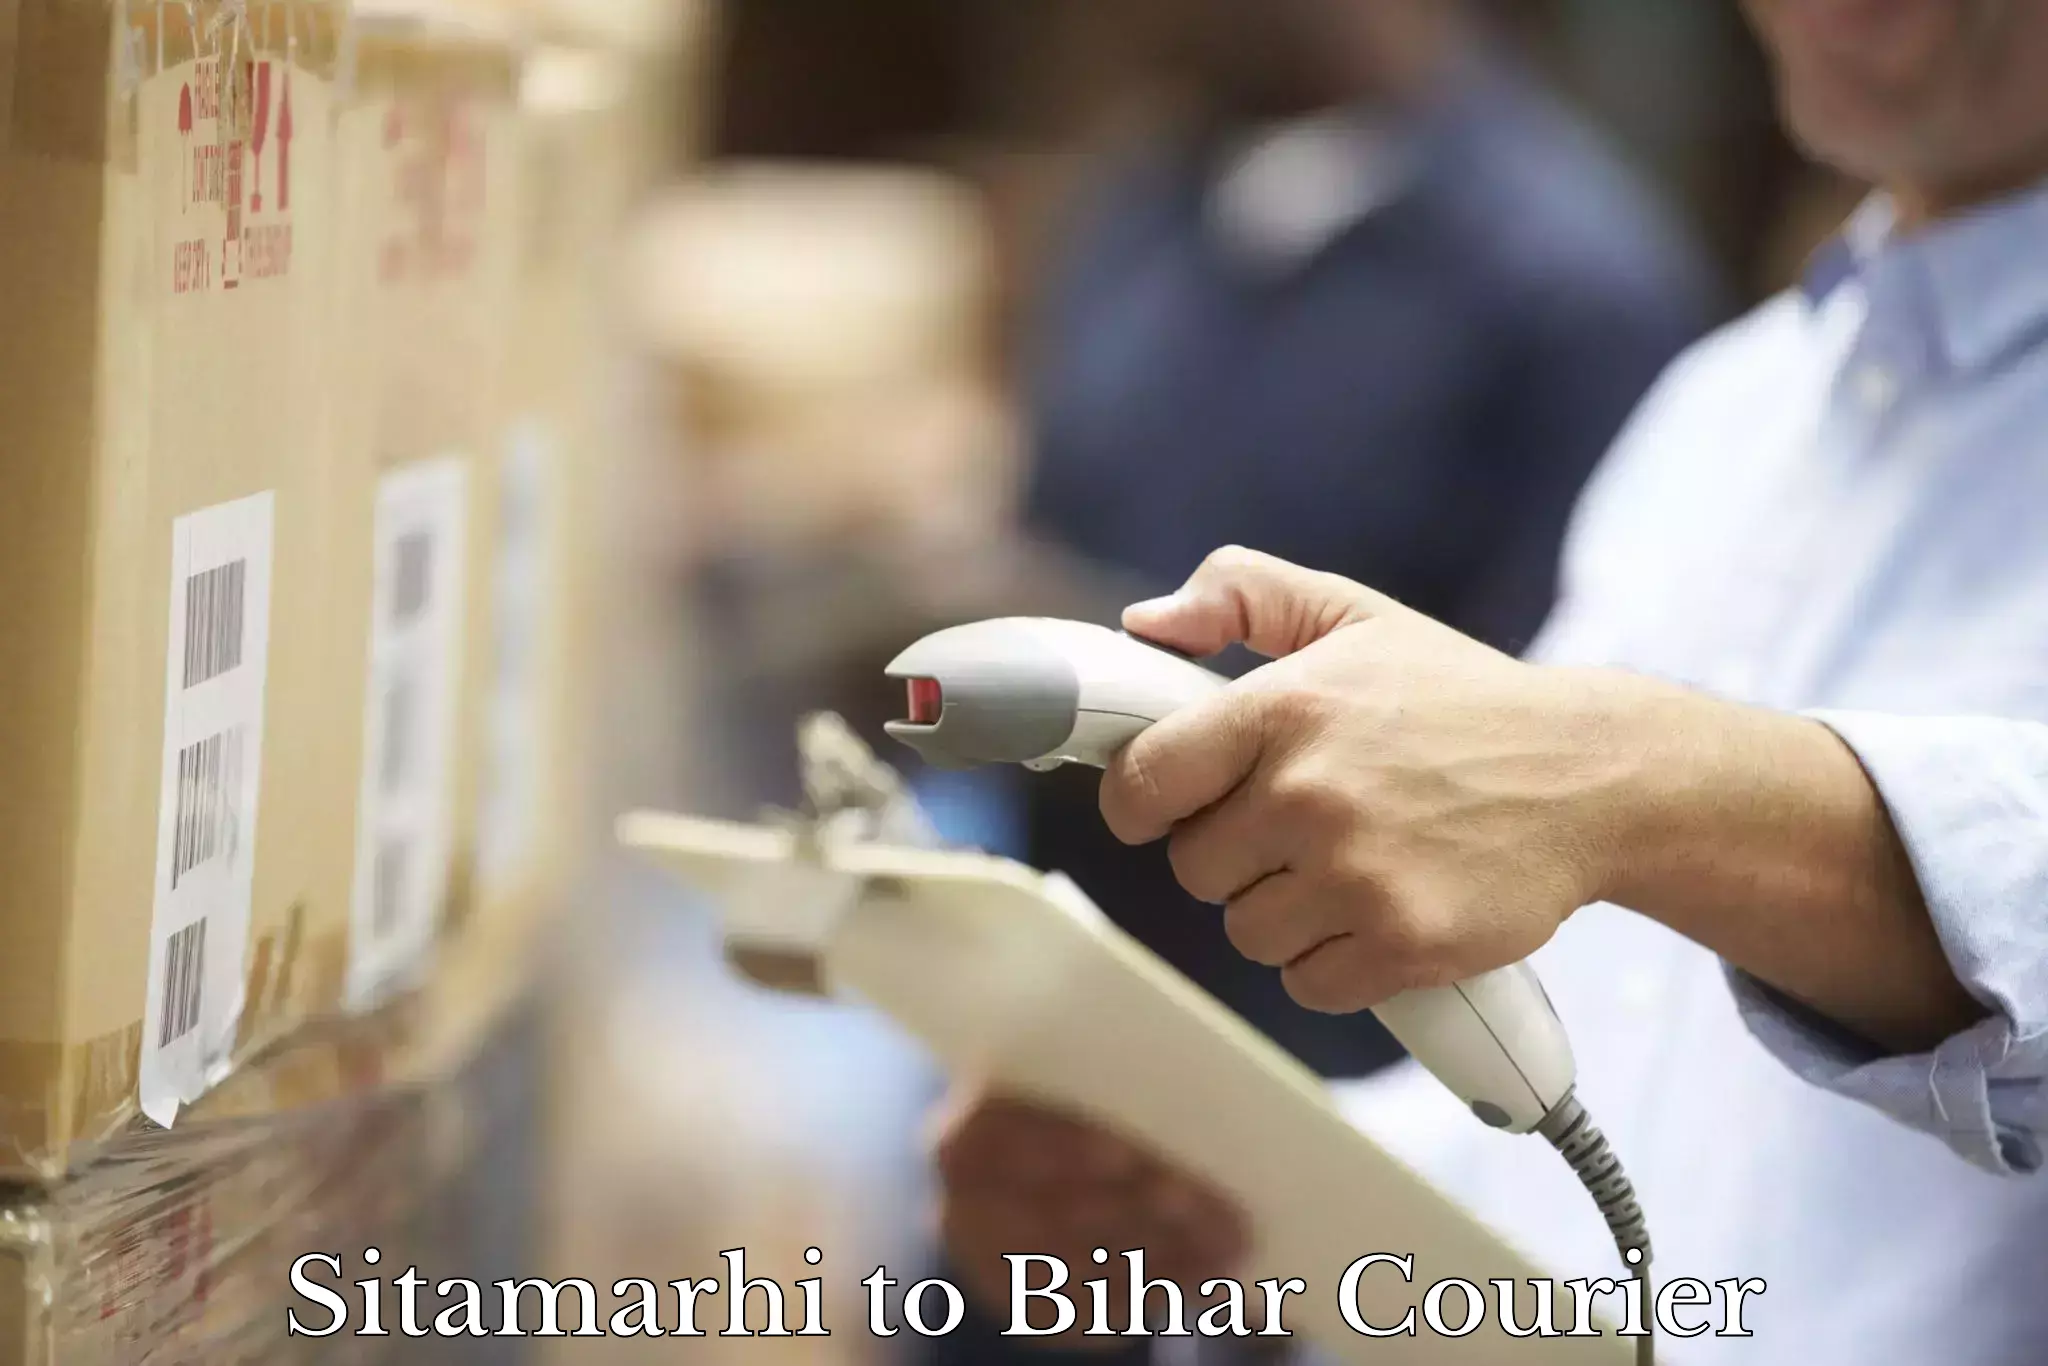 Courier service comparison Sitamarhi to Bikramganj